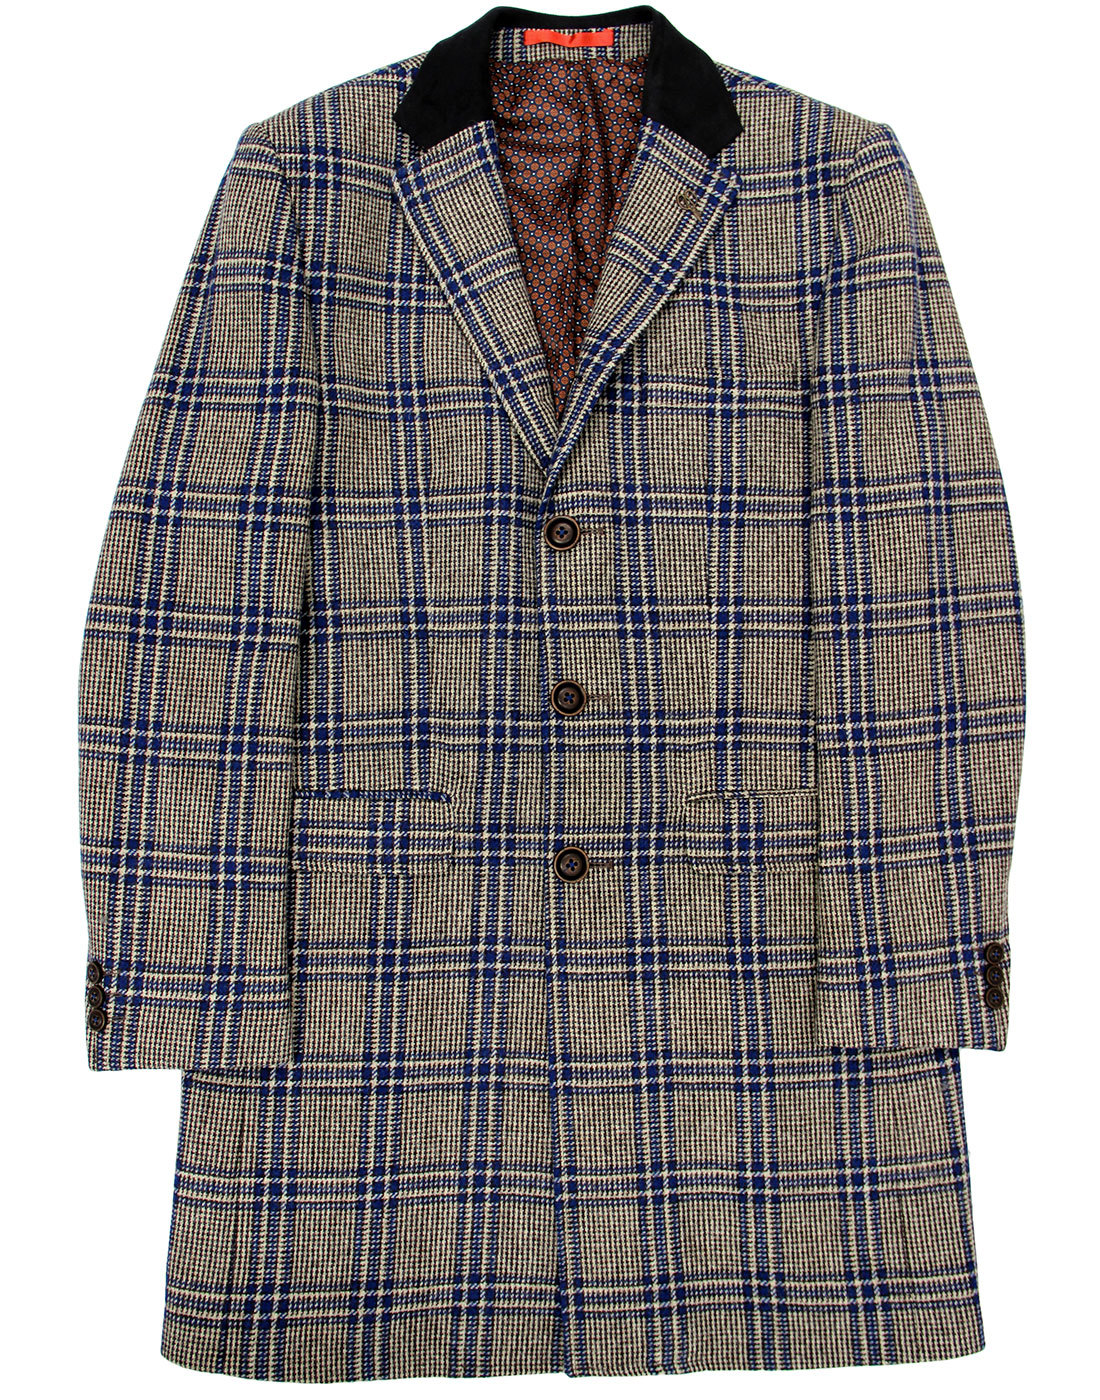 GIBSON LONDON 60s Mod POW Check 3/4 Length Dress Coat in Blue